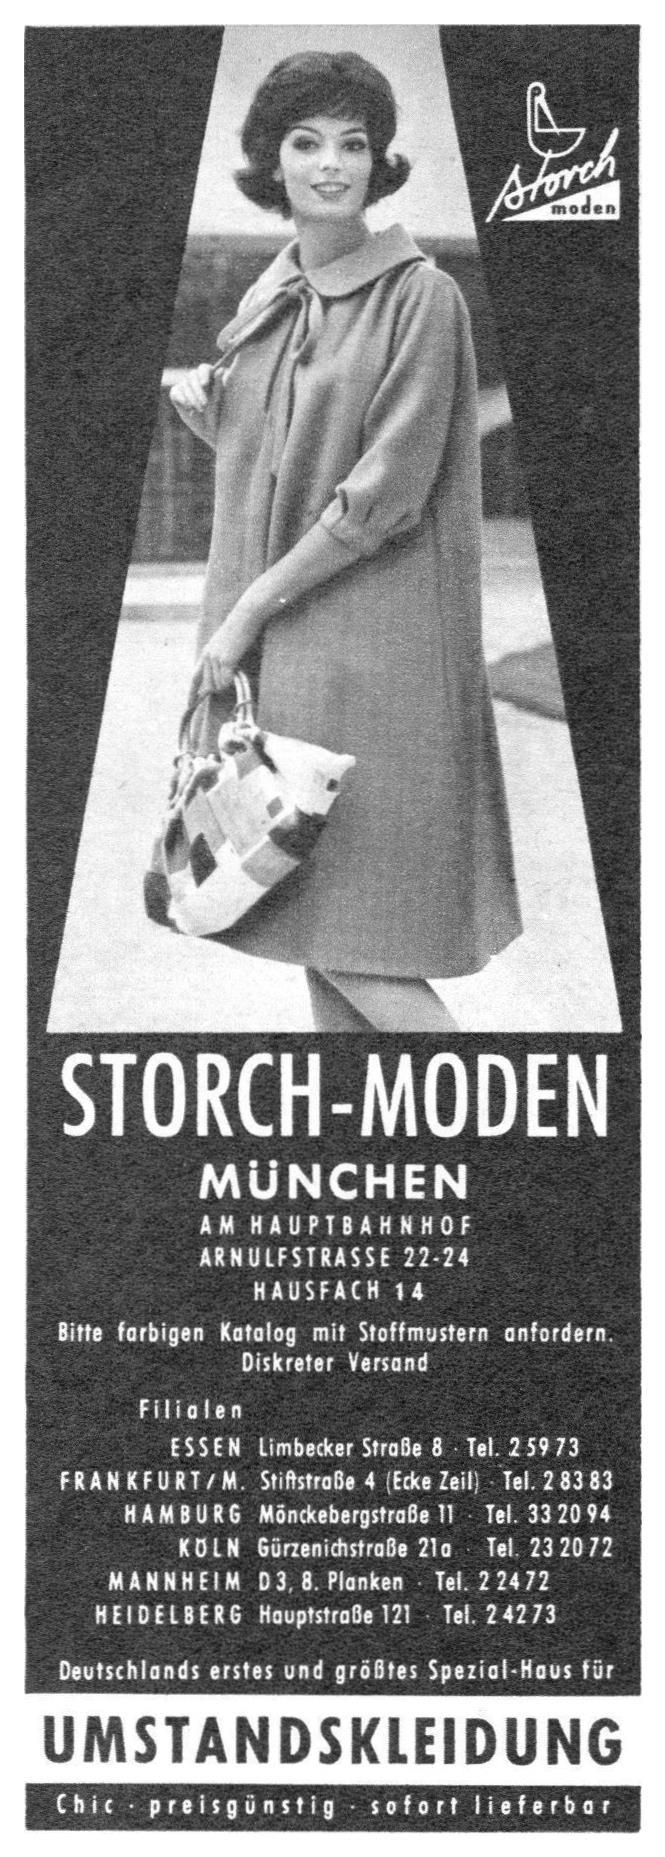 Storch-Moden 1961 0.jpg